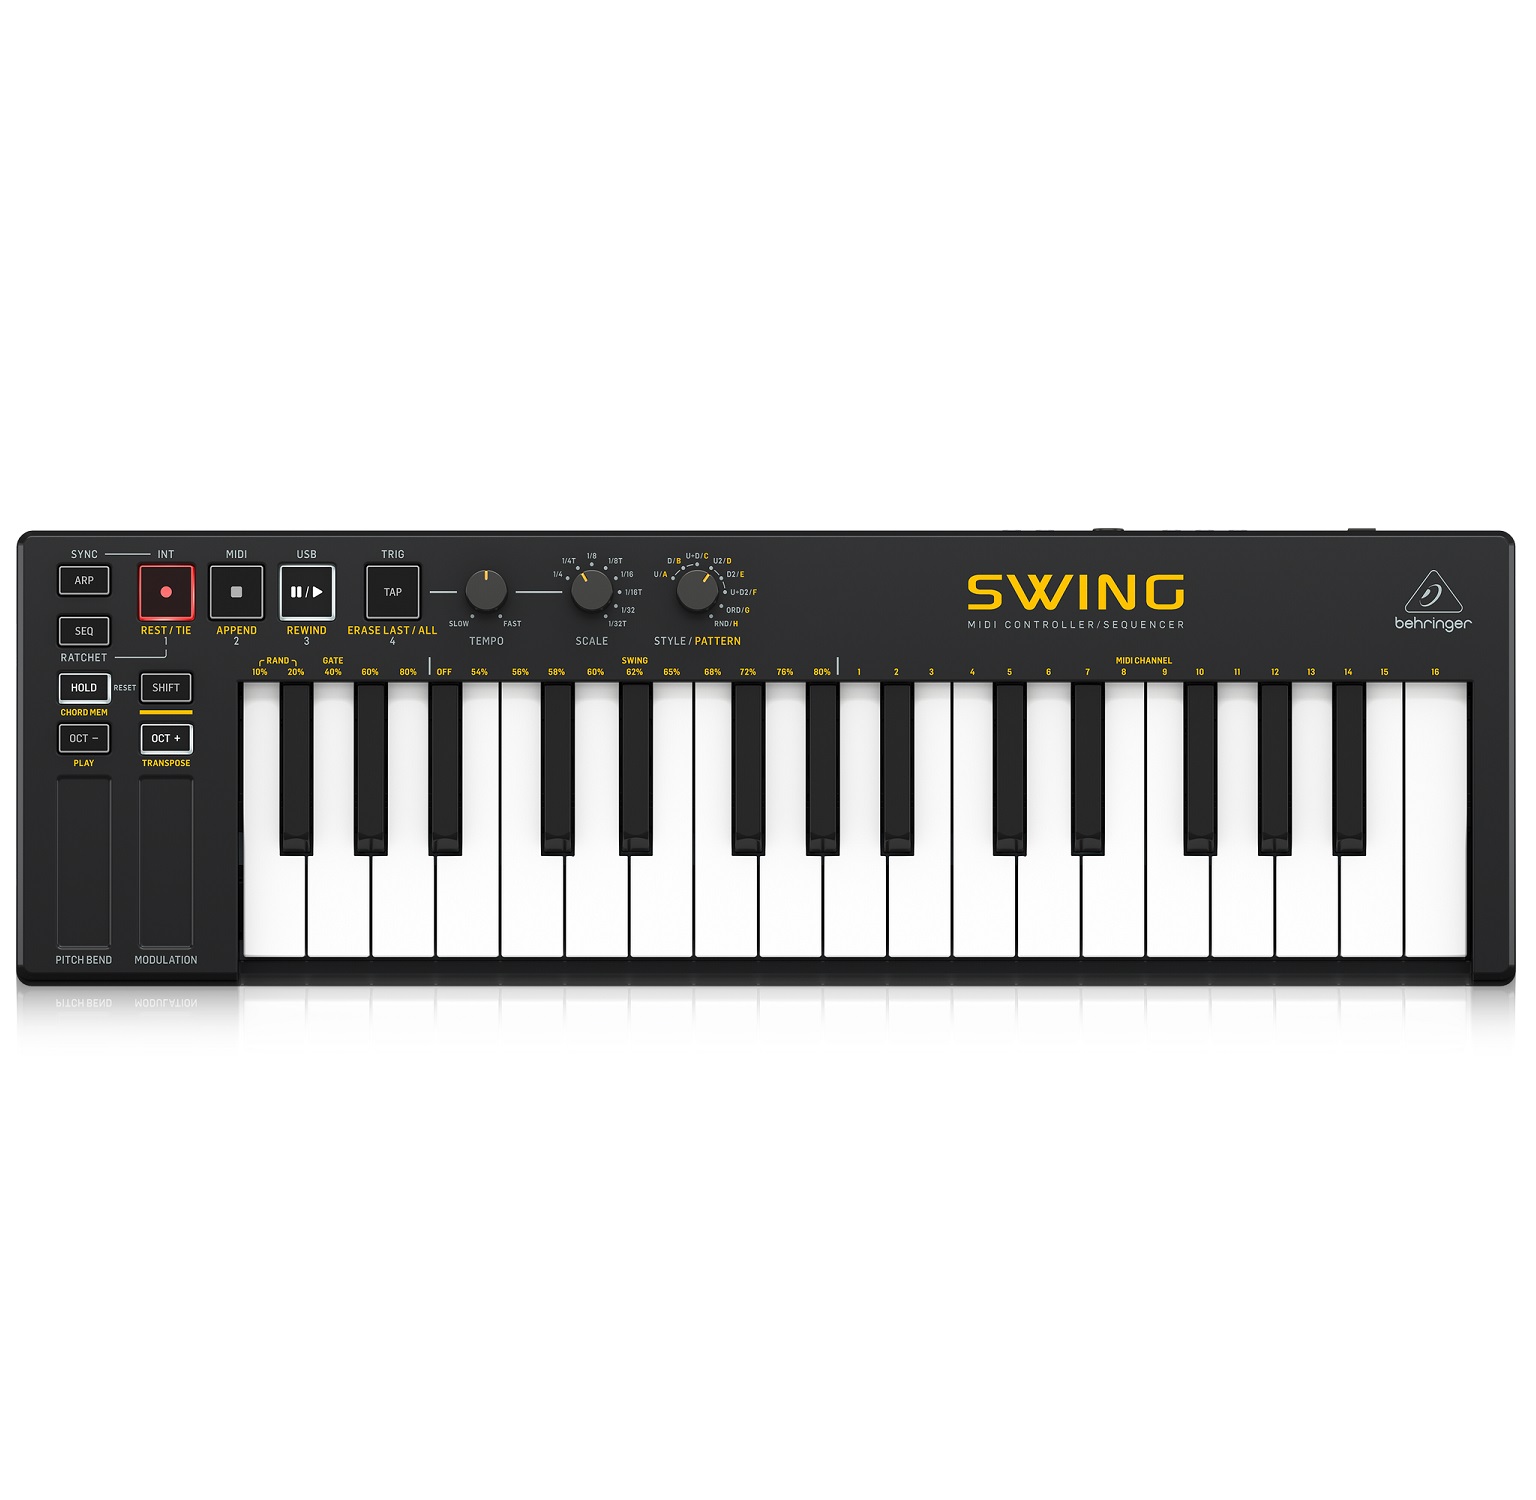 MIDI клавиатуры Behringer SWING midi музыкальные системы интерфейсы контроллеры behringer x touch extender